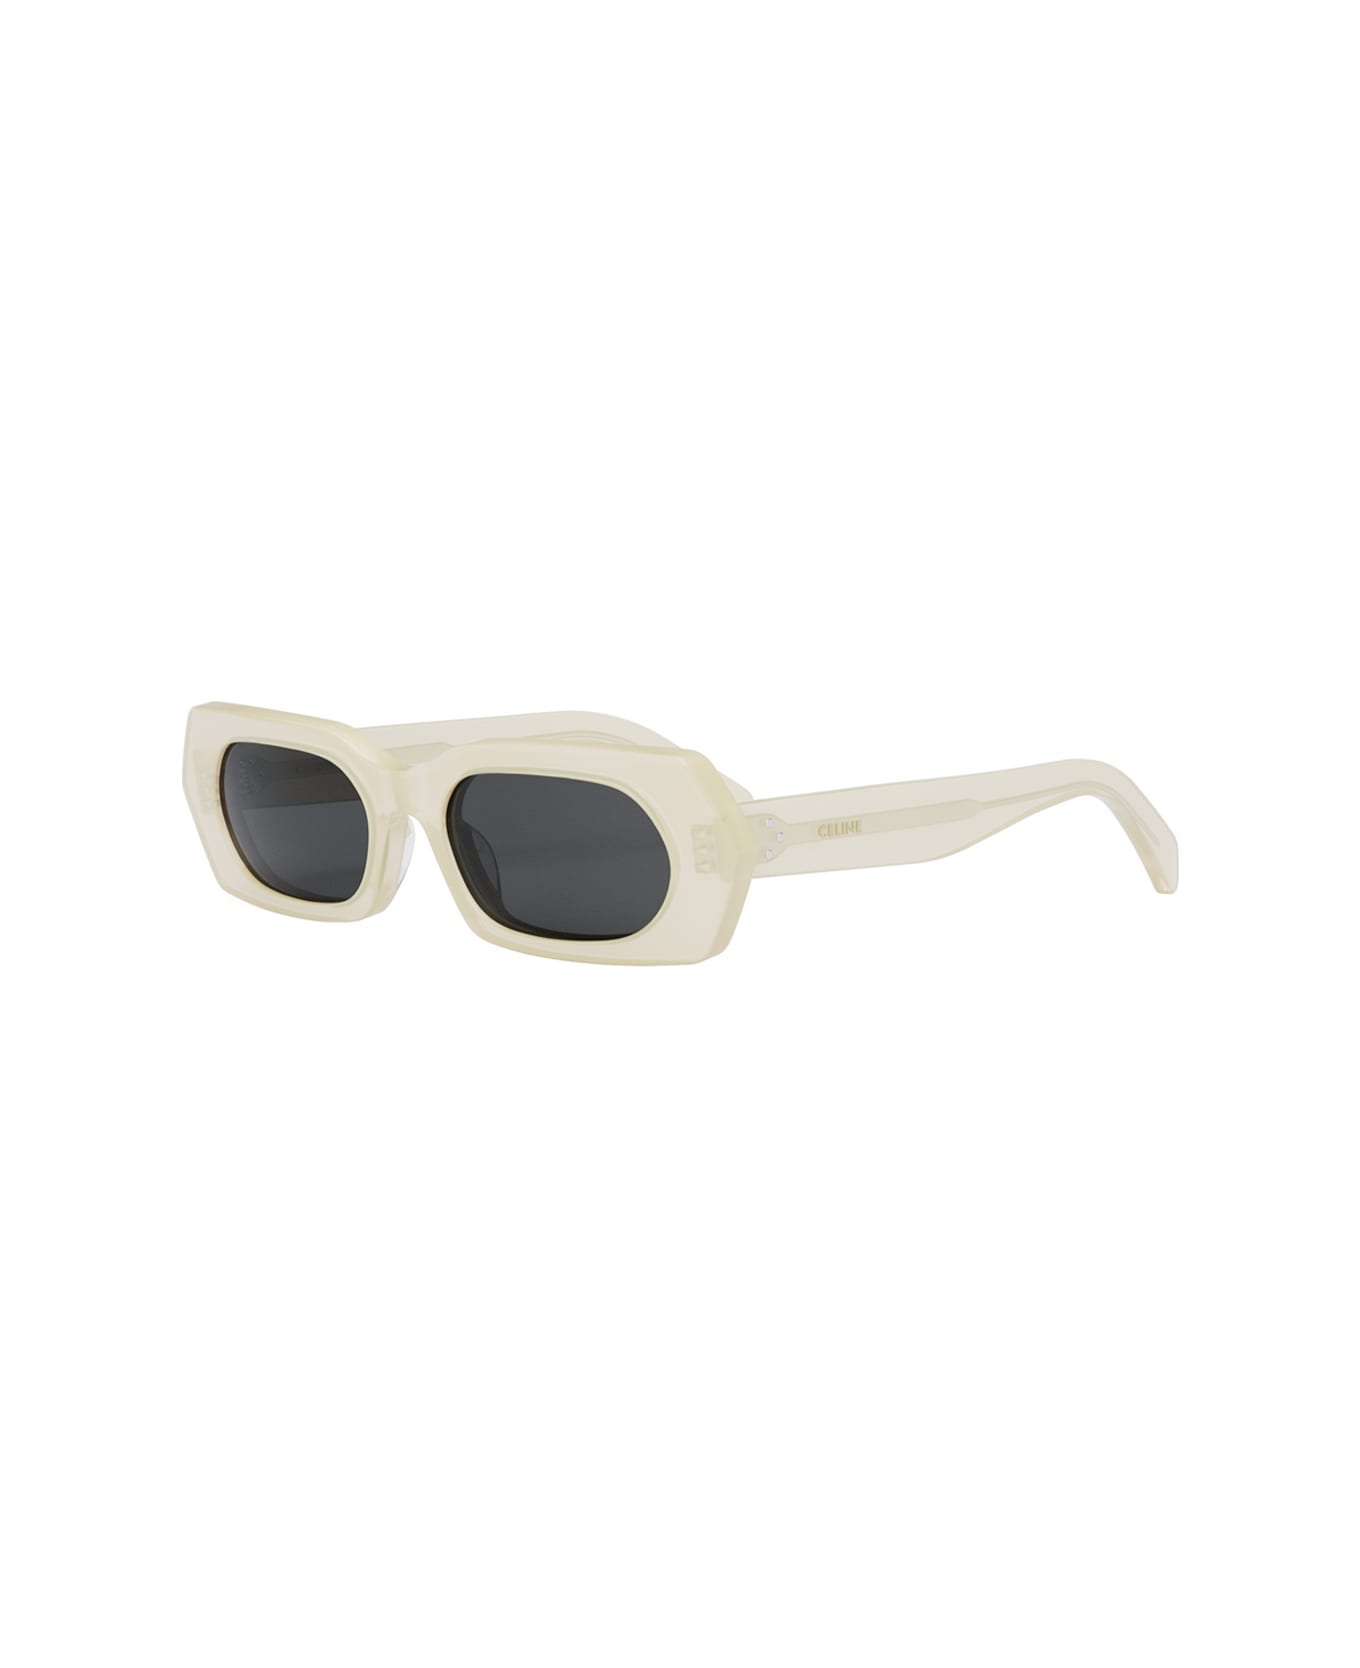 Celine CL40243I 39a sunglasses